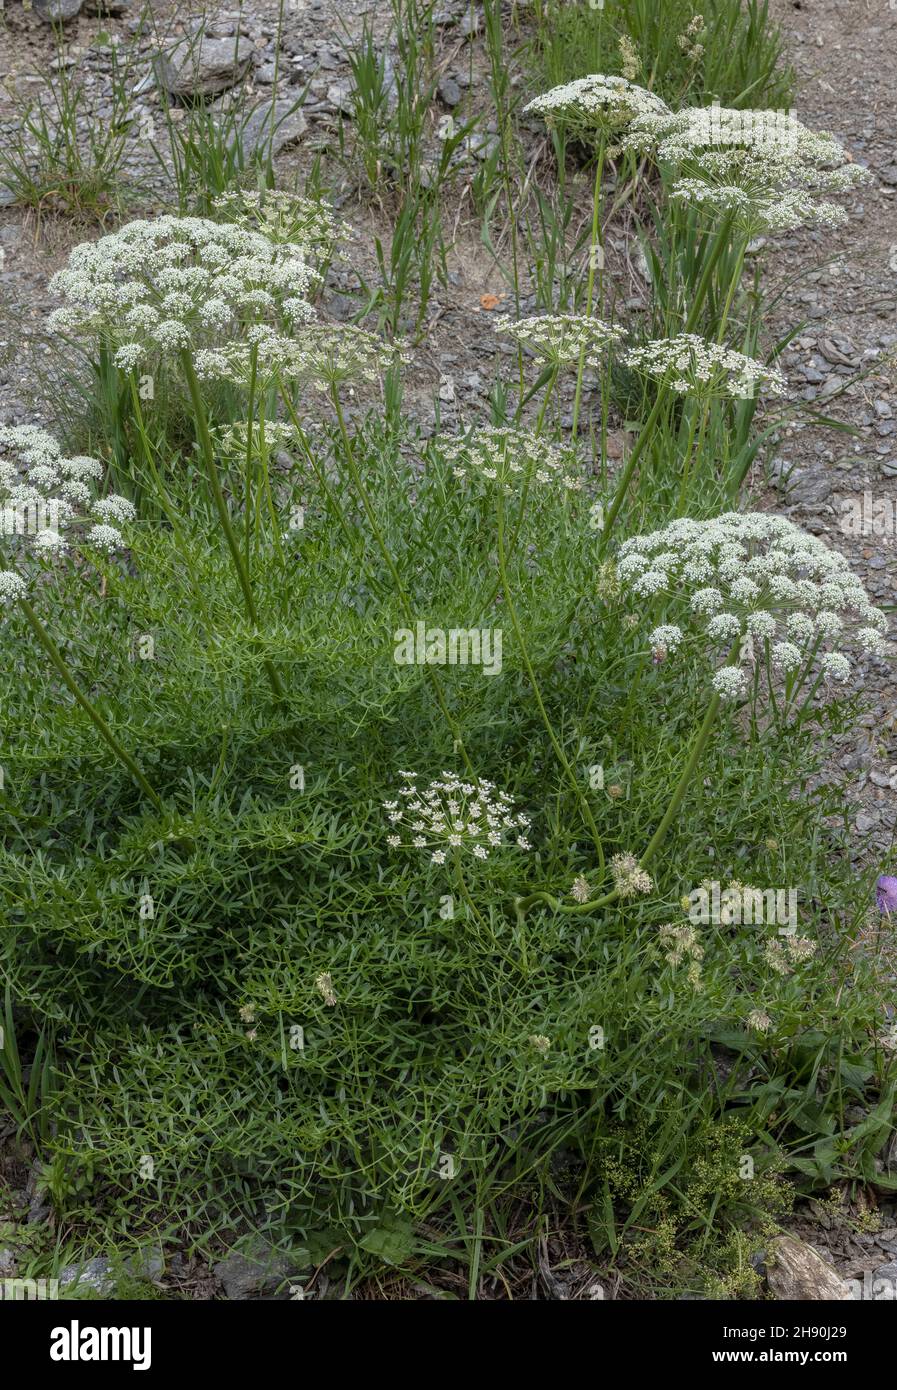 French Sermountain, Laserpitium gallicum on gravel in the Maritime Alps. Stock Photo